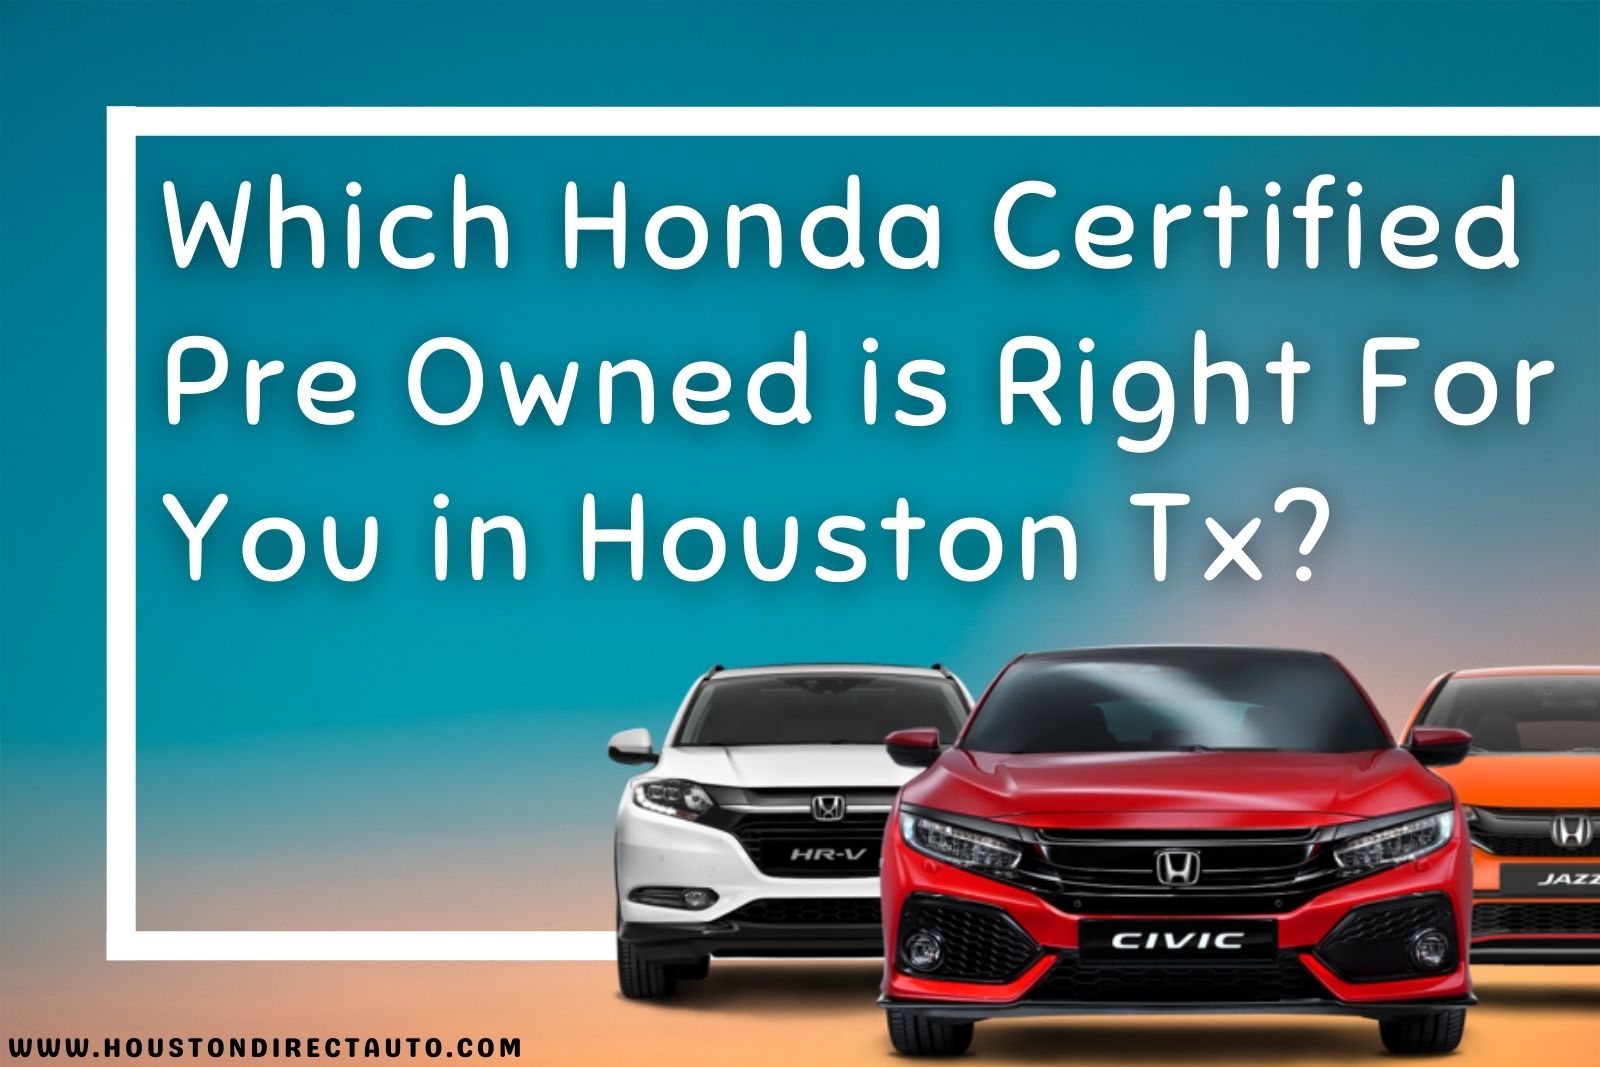 Used Hondas For Sale In Houston TX, Honda Certified Pre Owned In Houston TX, Honda Dealership Used Cars In Houston TX, Certified Used Honda In Houston TX